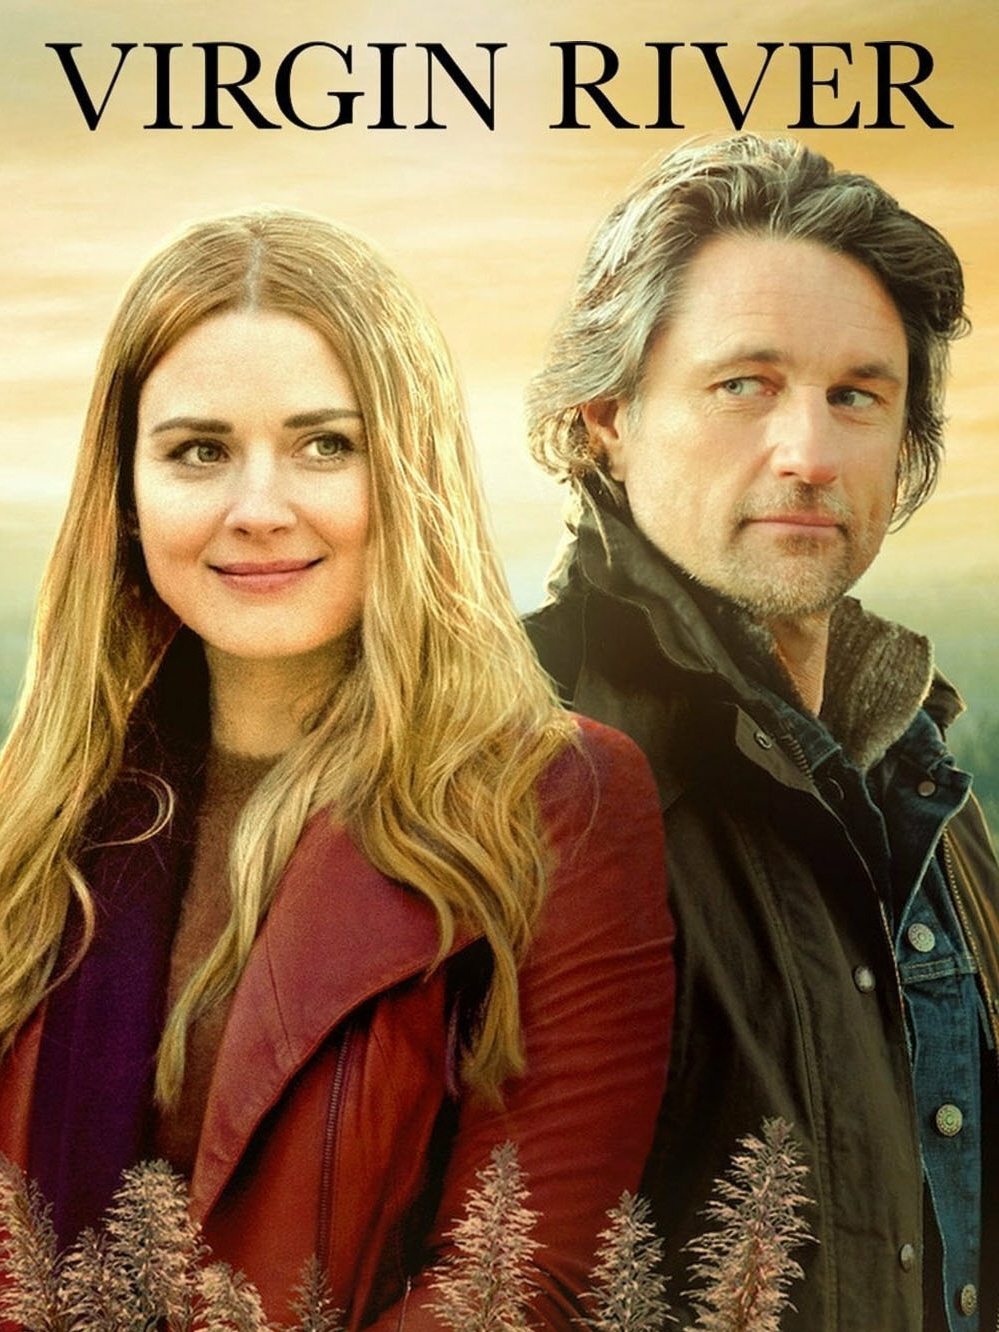 Season 4 Netflix Romance Virgin River Returns To Vancouver Squamish This Summer To Film Season